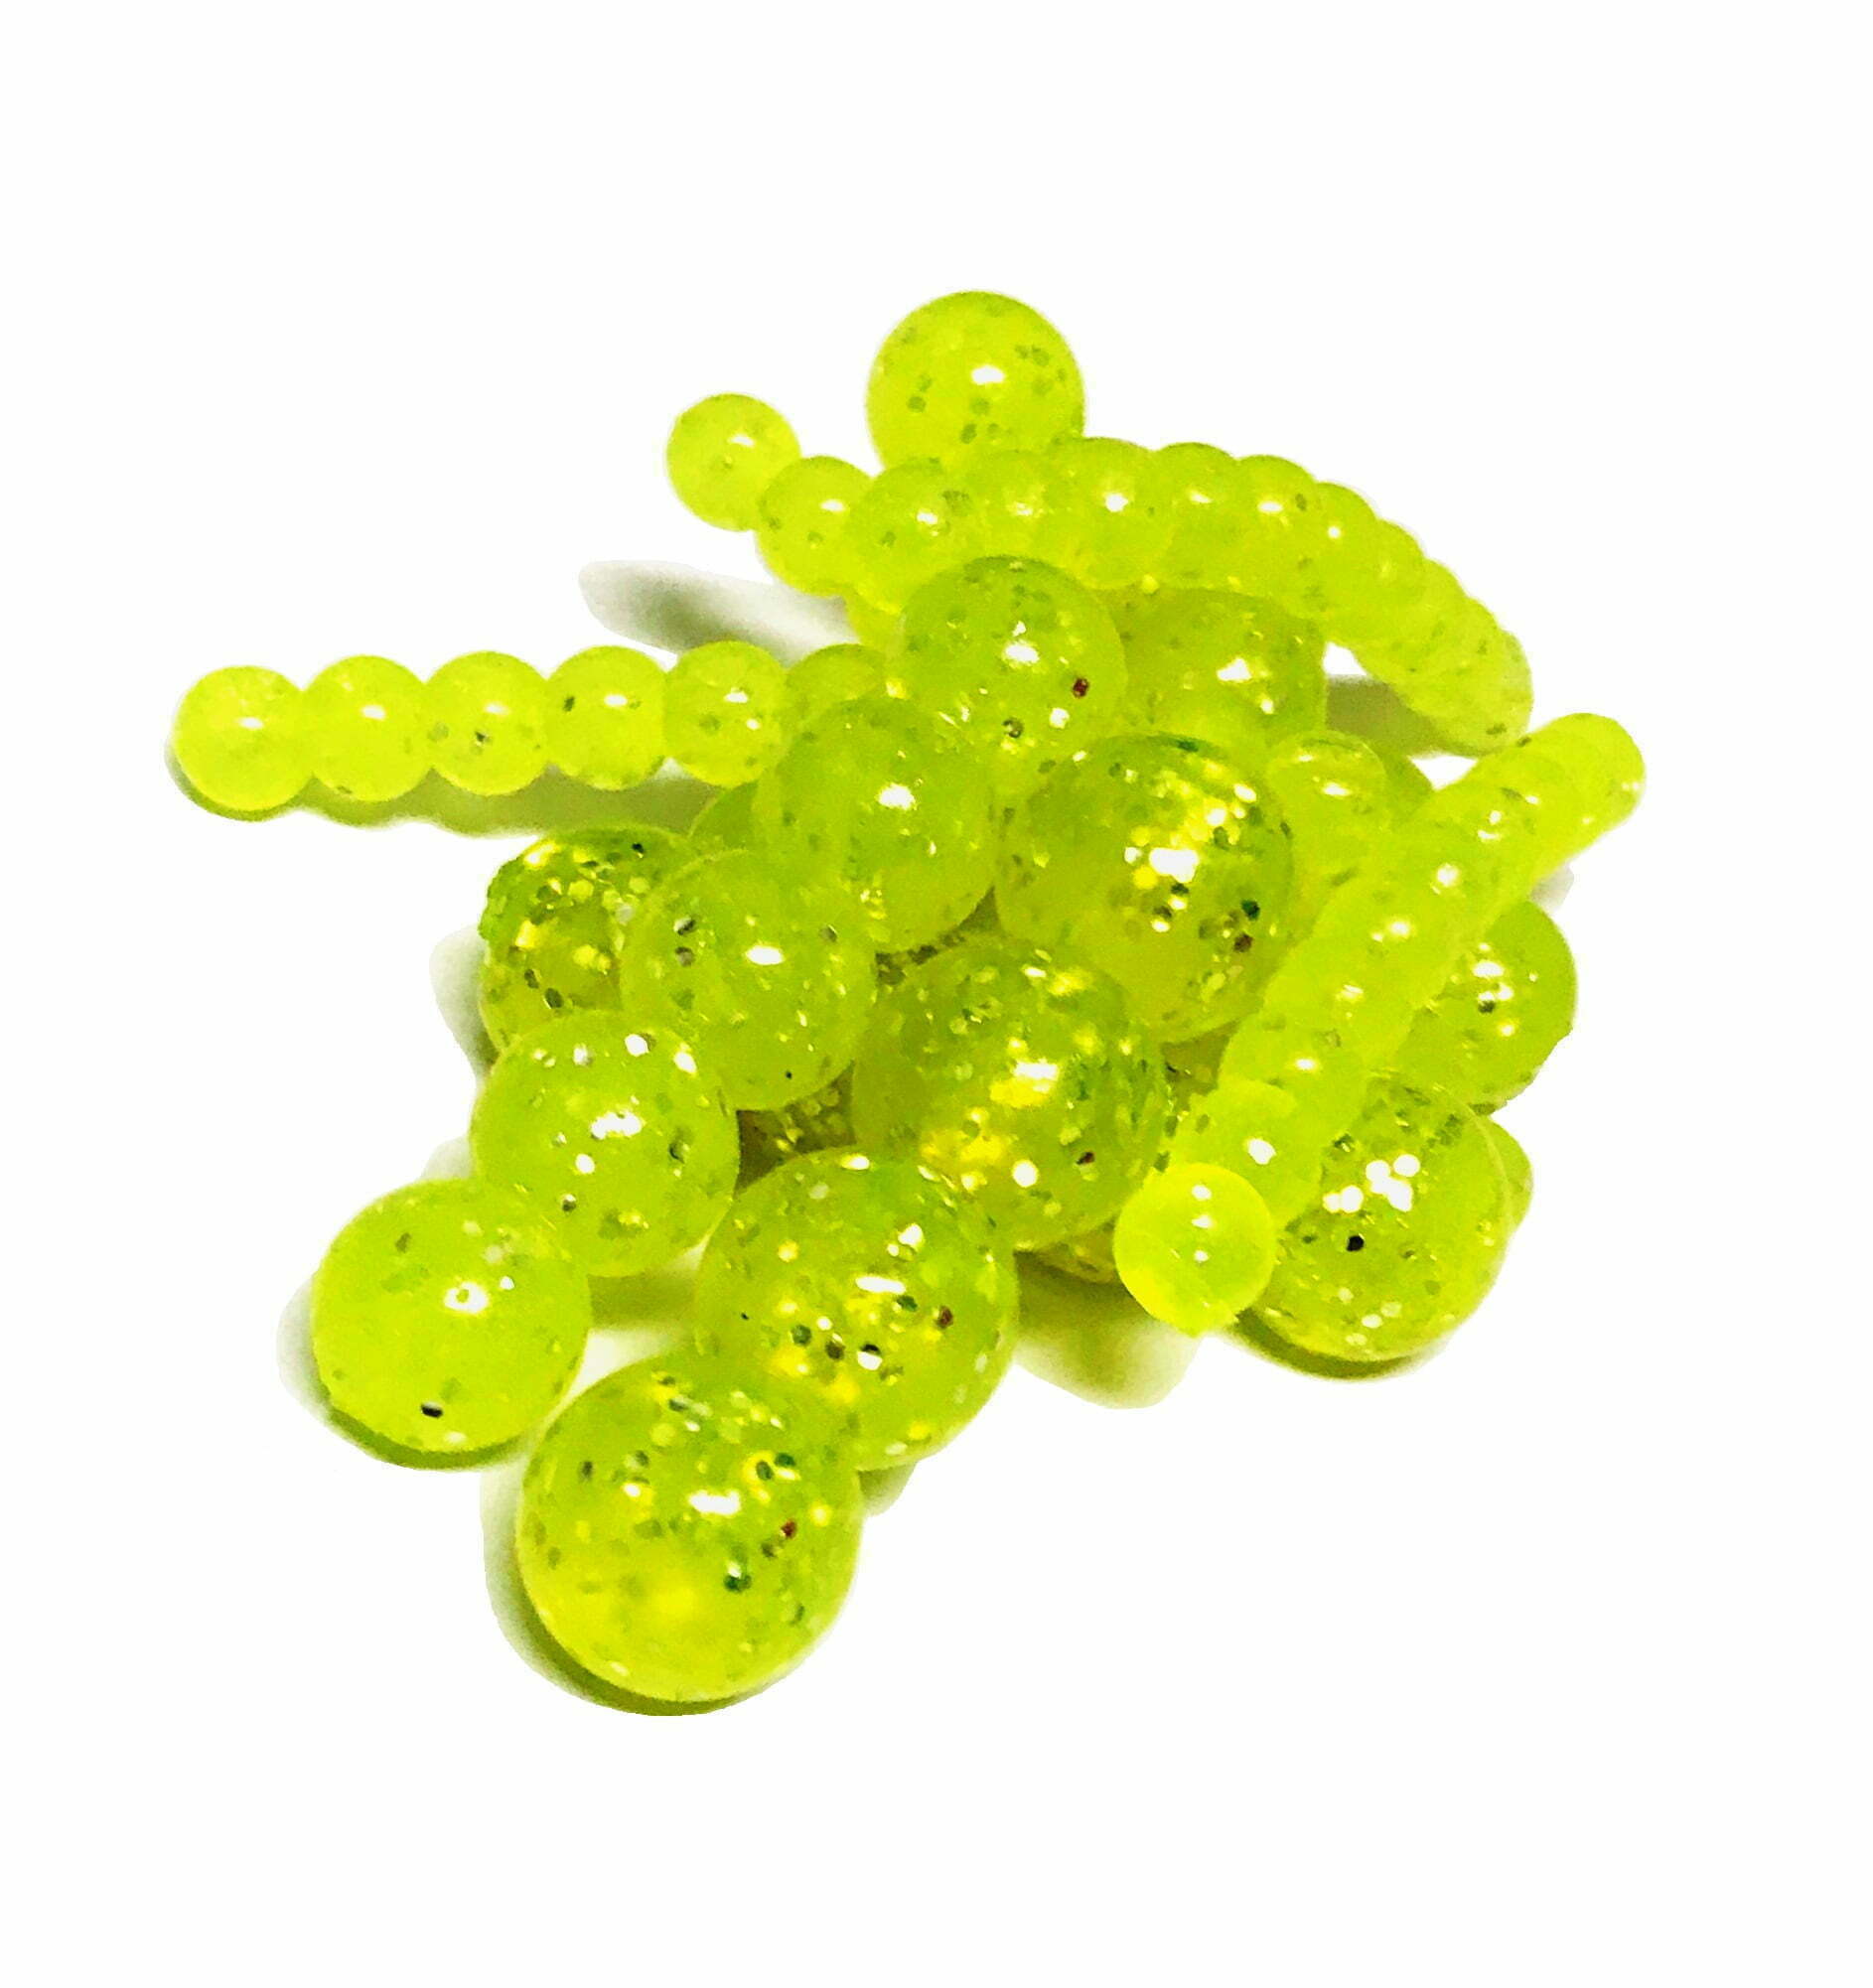 https://horkerbaits.com/wp-content/uploads/2020/04/Horker-Golden-Blob-Monster-chomps-Soft-Beads.jpg